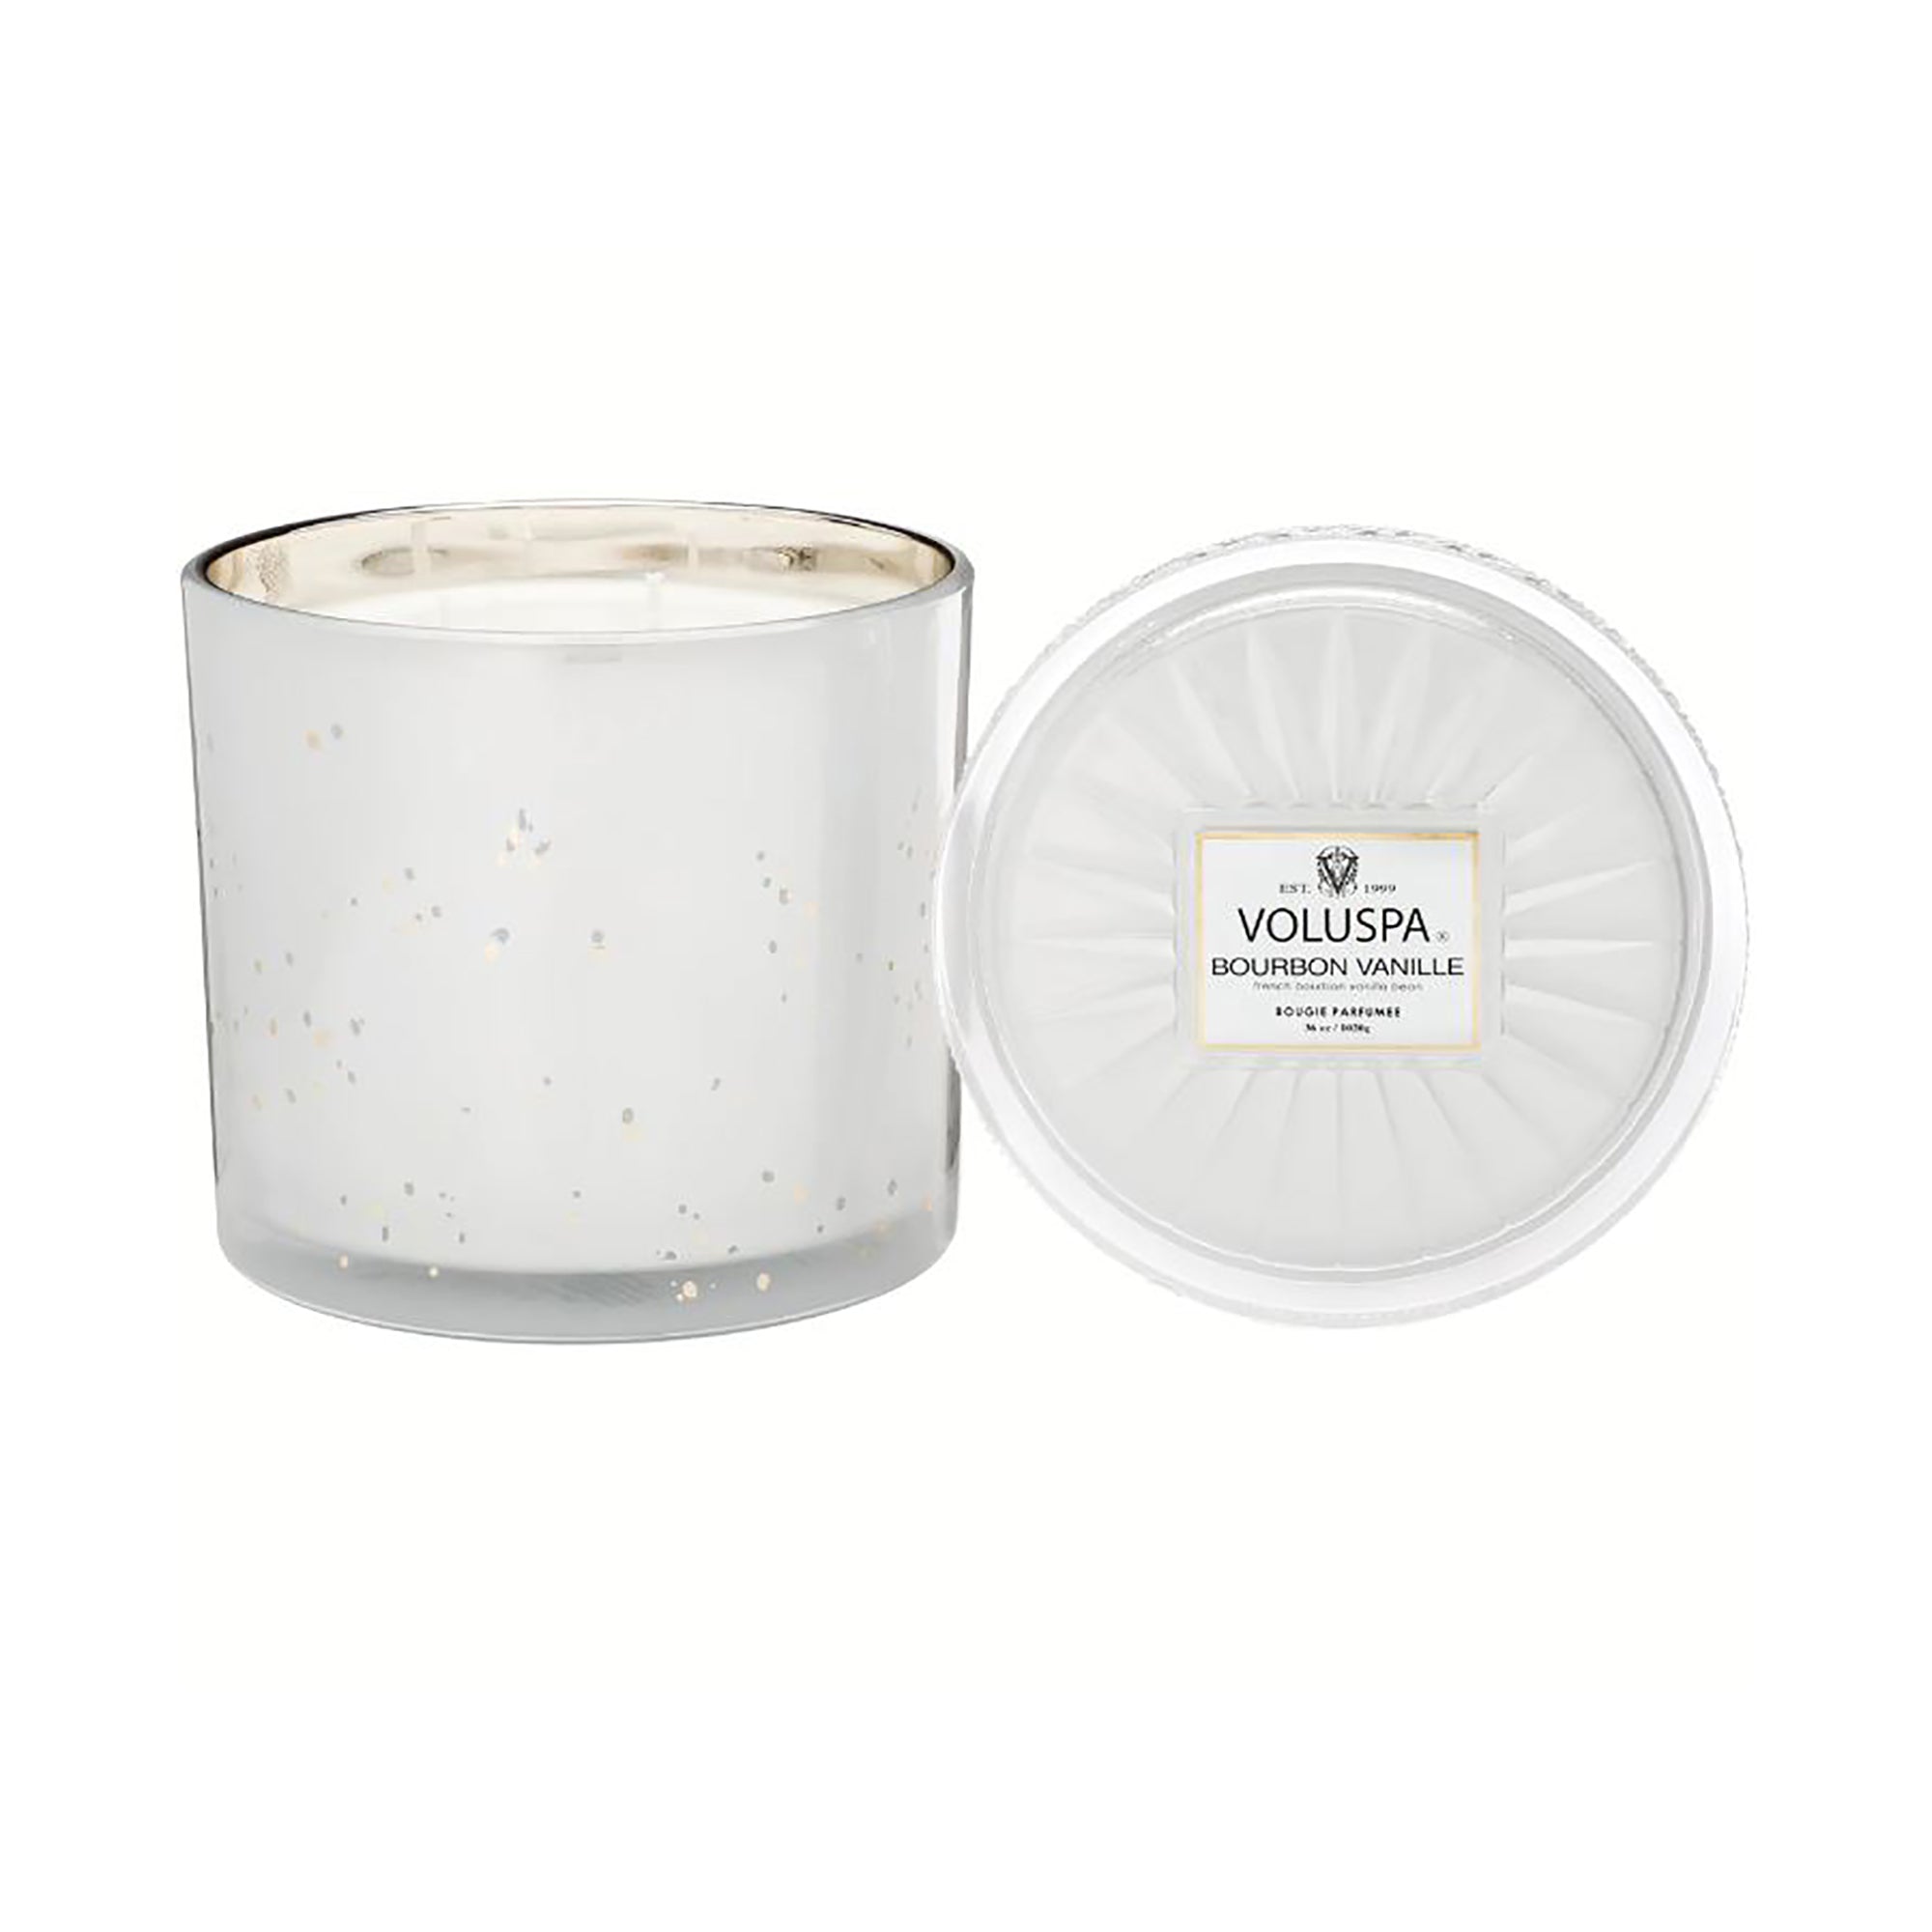 Voluspa Vermeil Grande Maison Candle / Bourbon Vanille